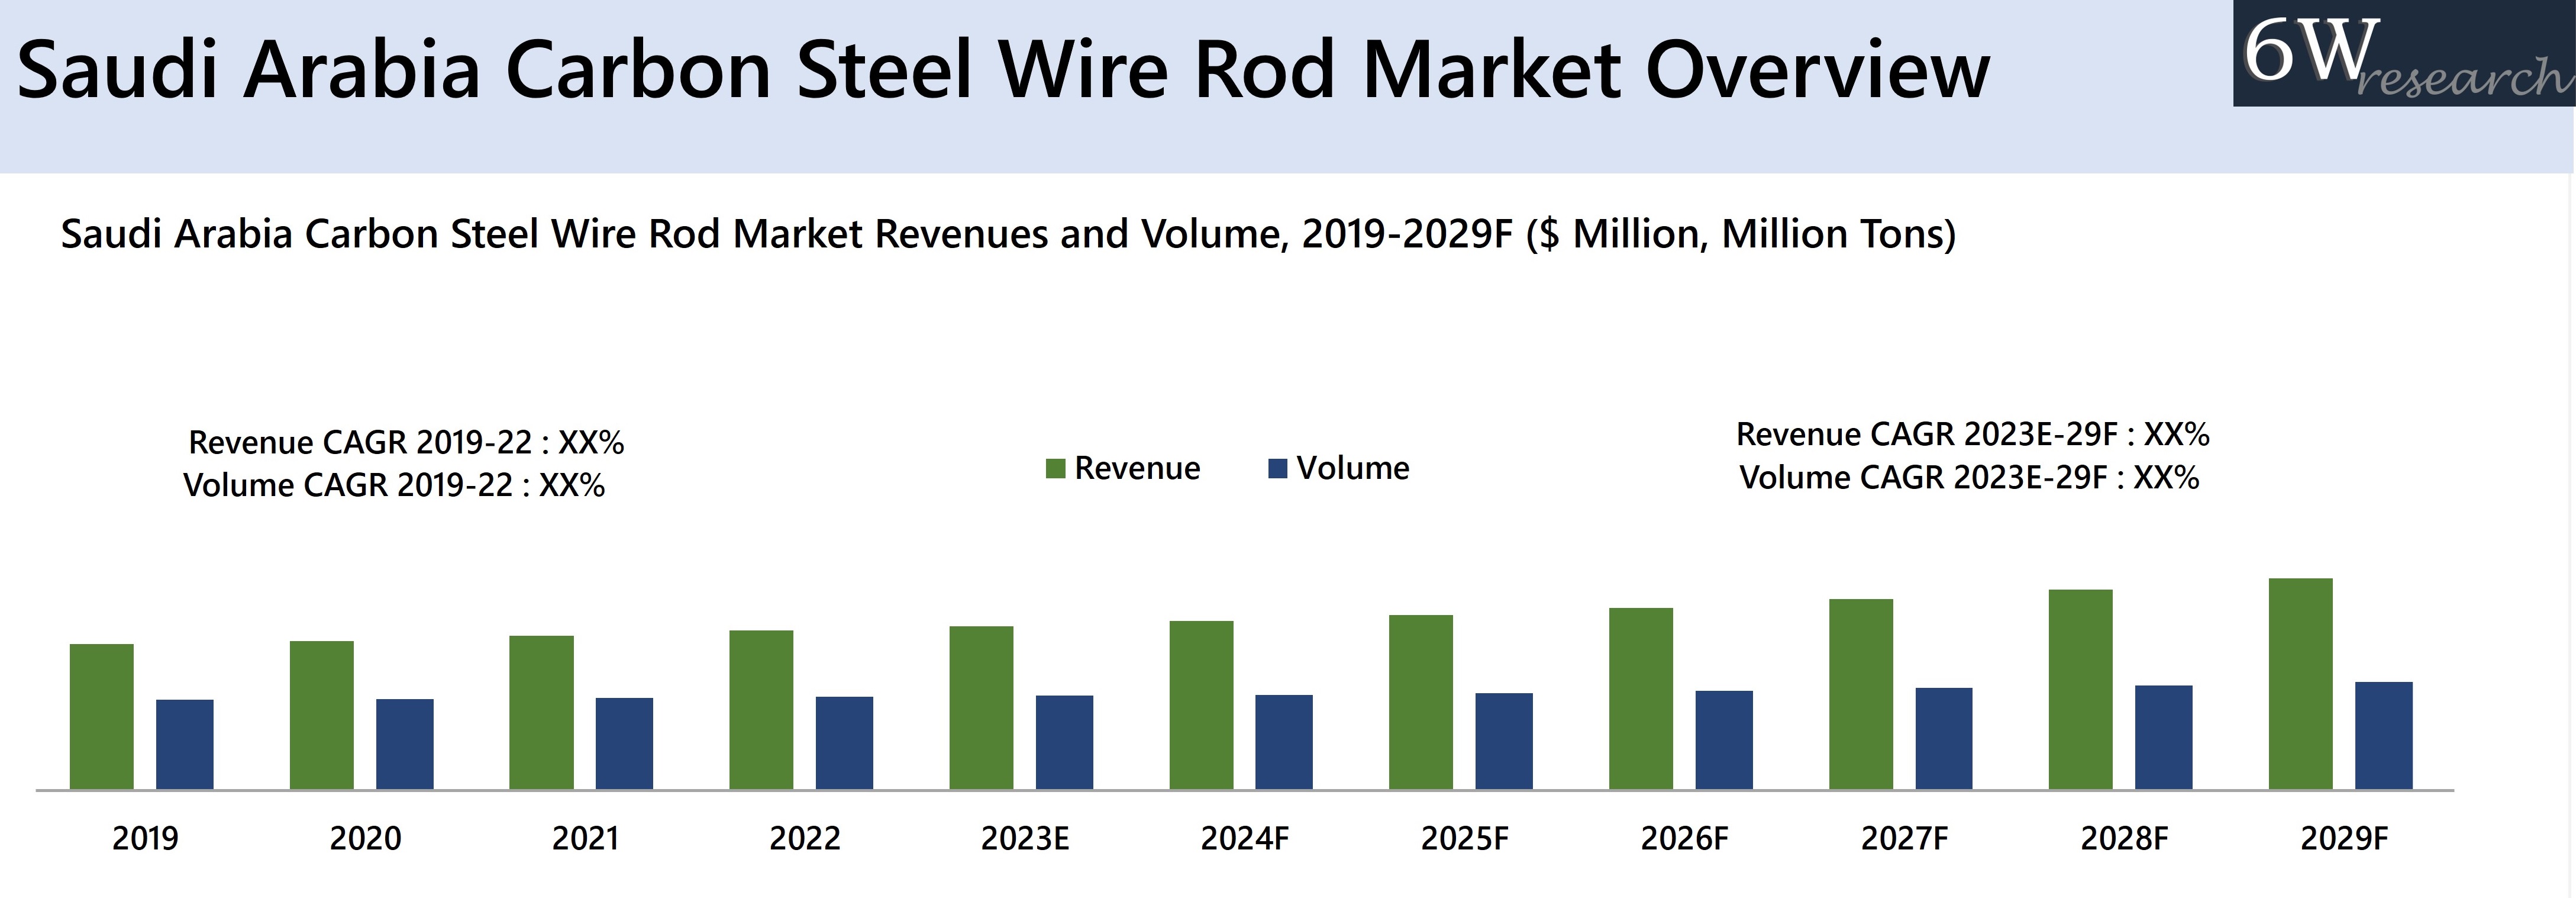 Saudi Arabia Carbon Steel Wire Rod Market Overview